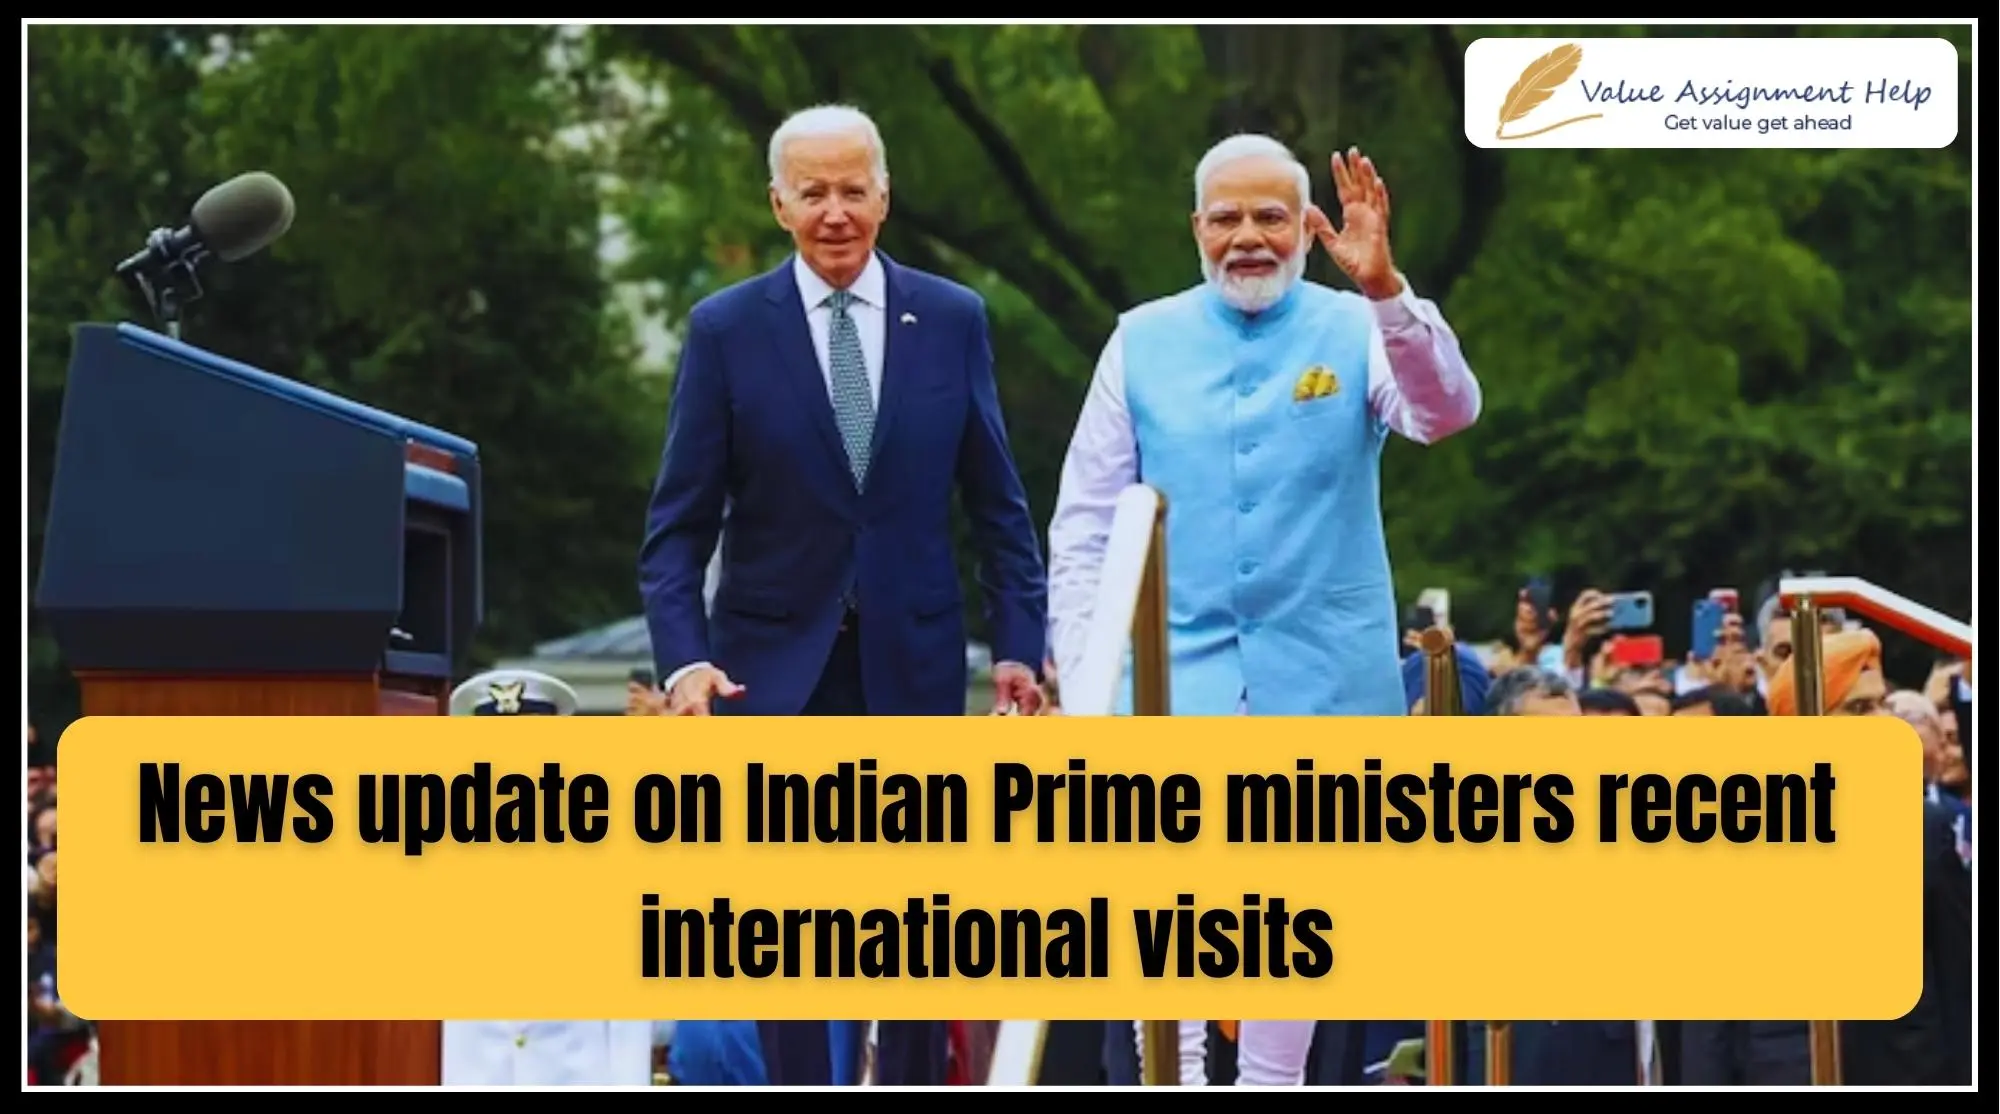 news update on indian prime minister recent international visits